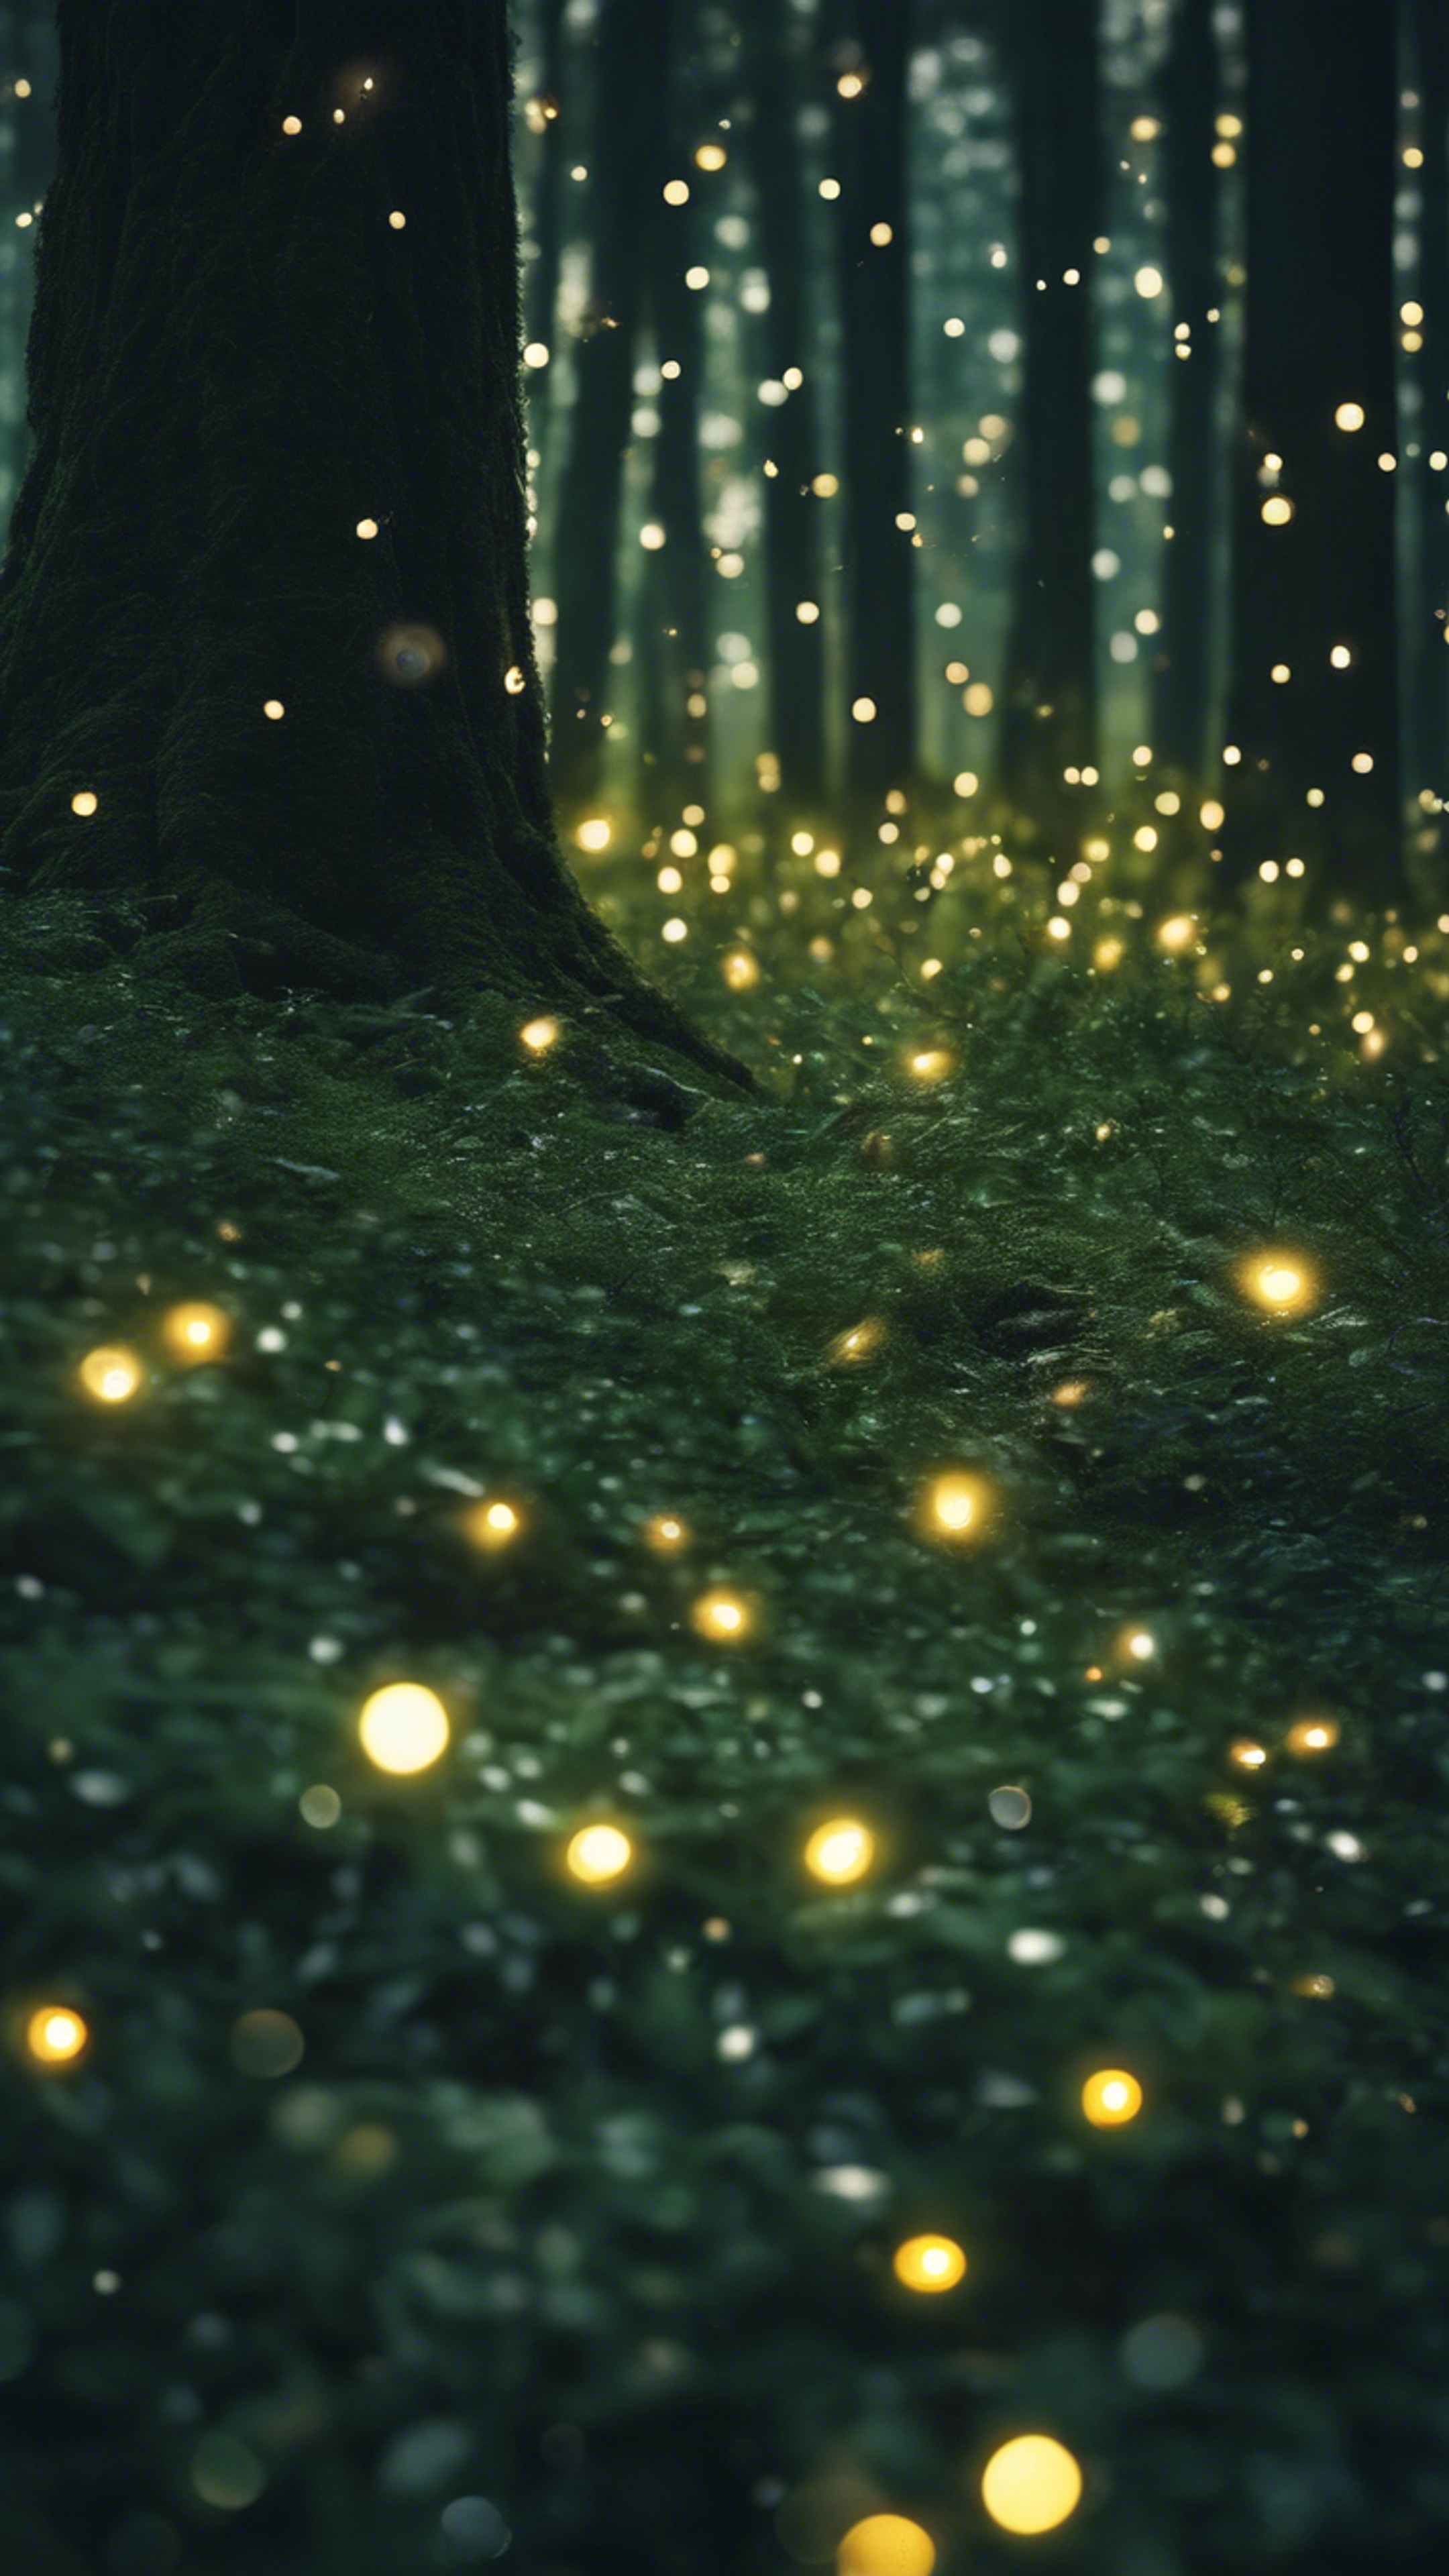 A dark green forest in the twilights, flecked with shimmering fireflies. ផ្ទាំង​រូបភាព[48f2b28e2b5742fcbebf]